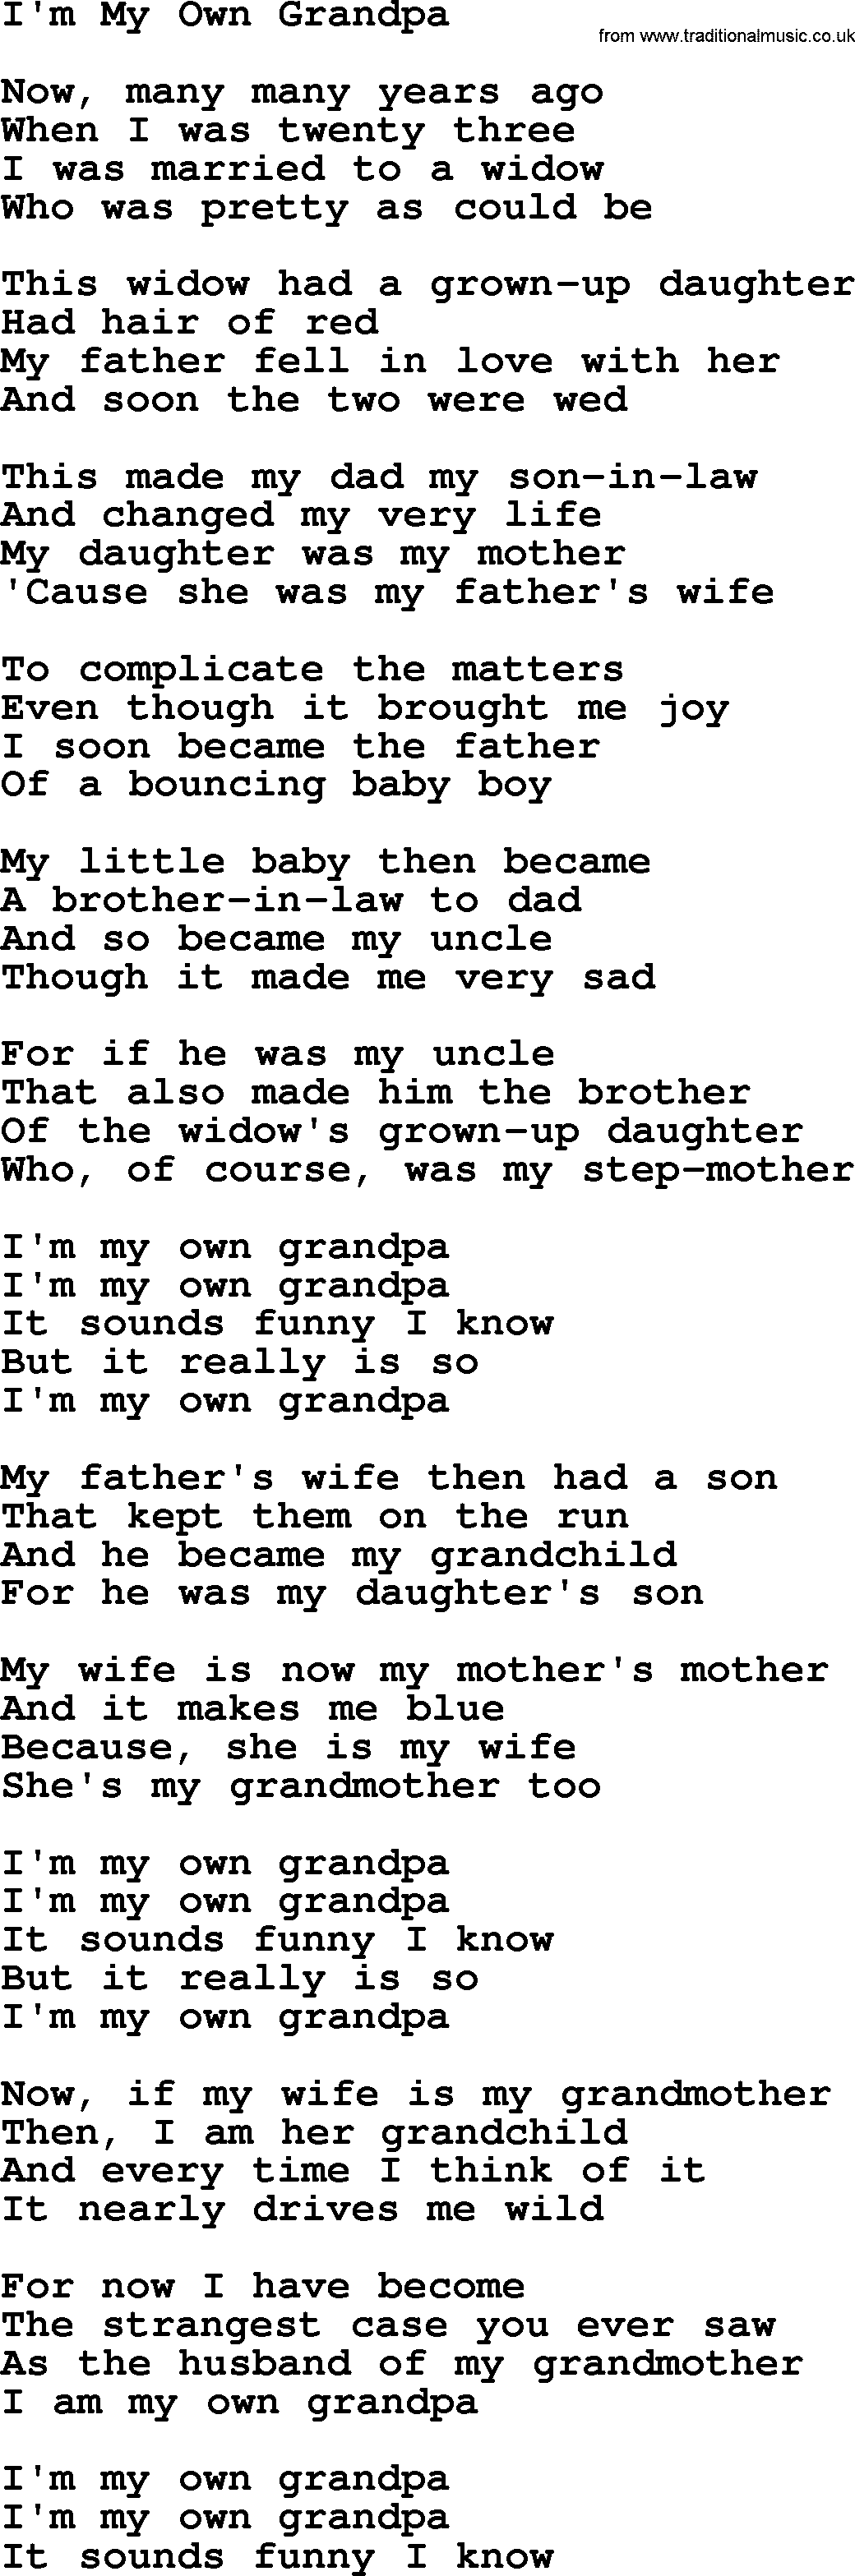 Willie Nelson song: I'm My Own Grandpa lyrics